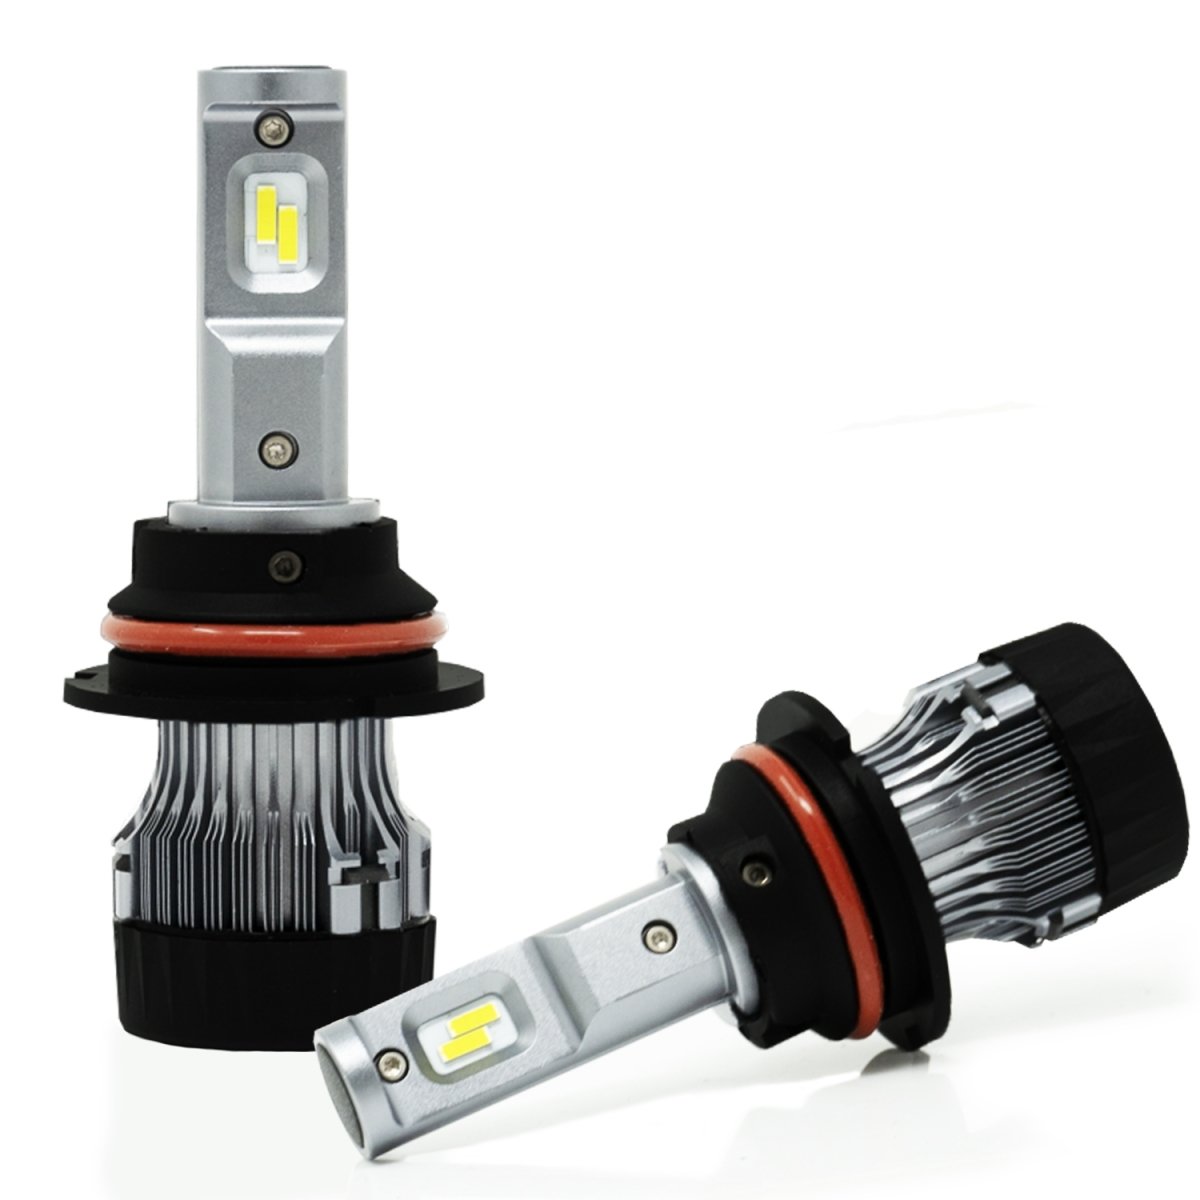 S-HCR HB5 9007 LED Bulbs Forward Lighting Replacement Upgrade -Alla Lighting